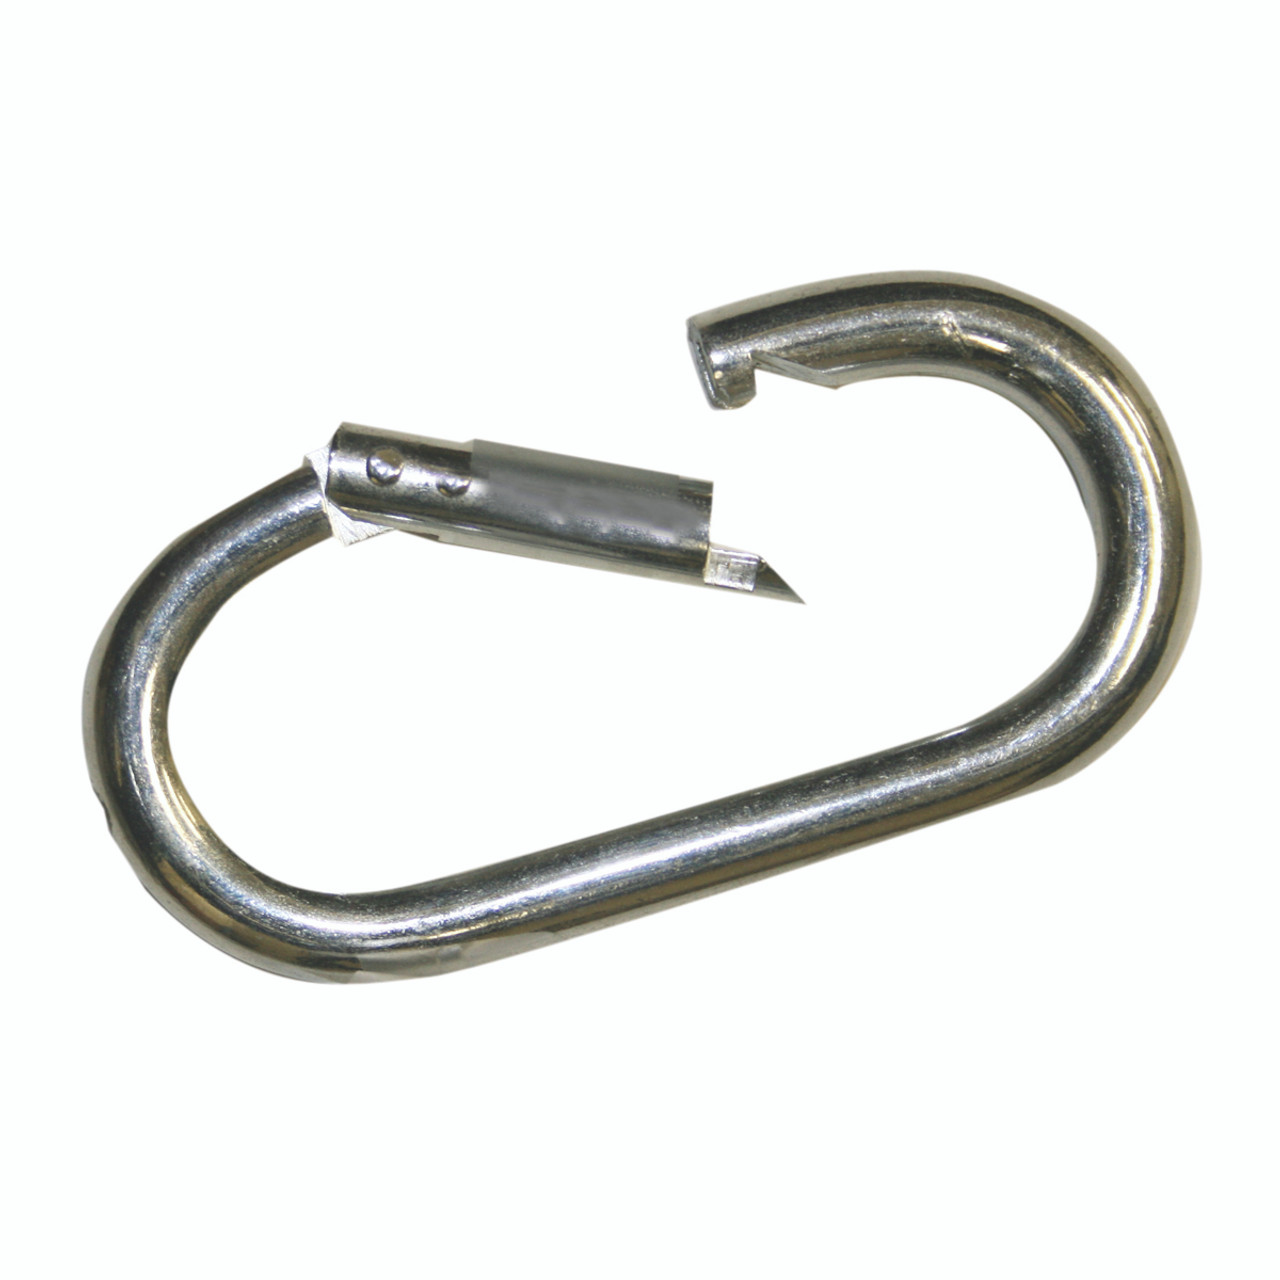 Baseline¨ MMT - Accessory - Threaded Oval Spring Hook